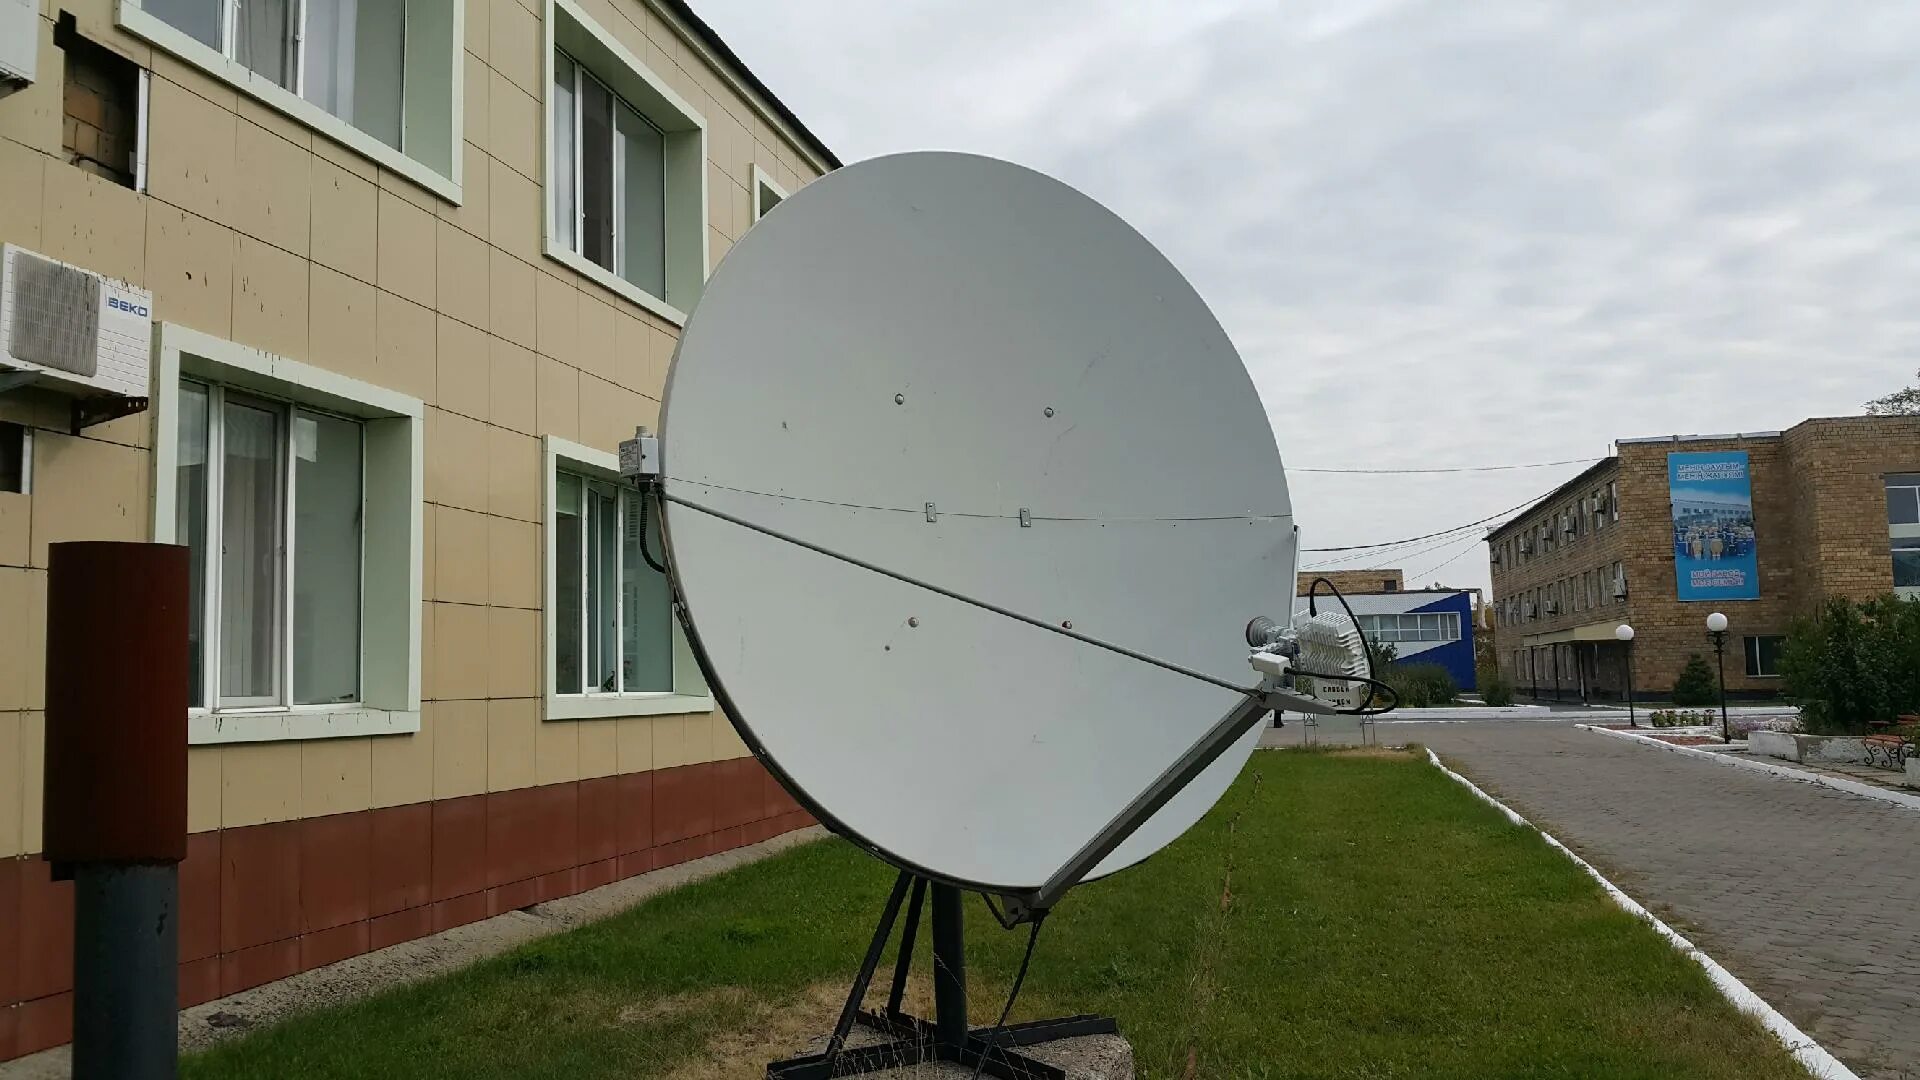 Земная станция связи. Станции спутниковой связи р-448 "Аурига". Земная спутниковая станция связи ЗССС. VSAT станция спутниковой связи 1.20. Спутниковая станция р-441 лм.